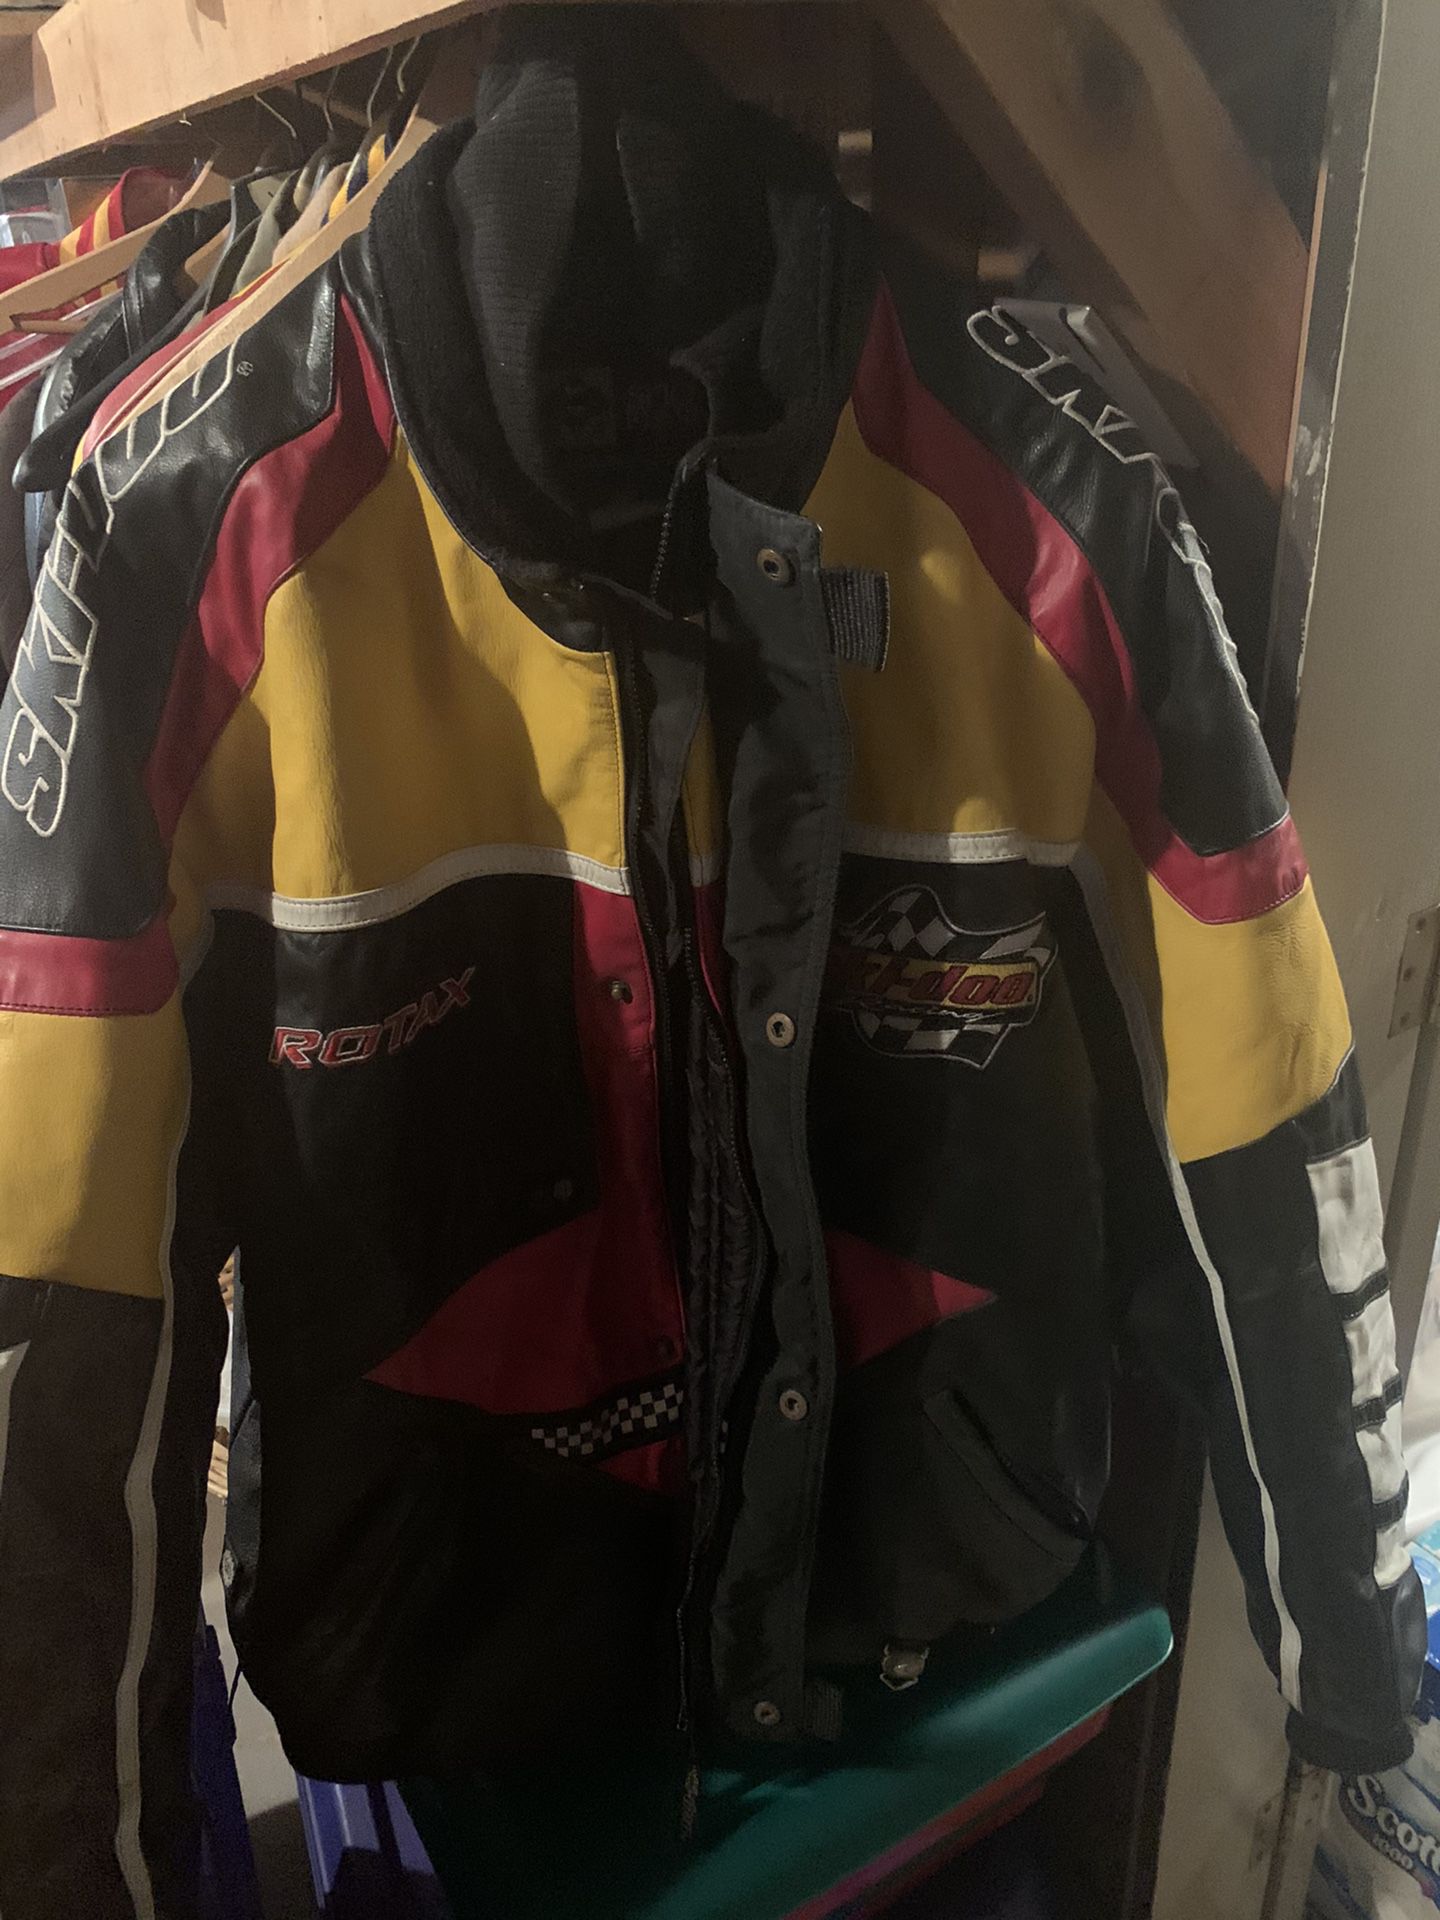 Heavy Leather Ski Doo snowmobile jacket in Great shape!